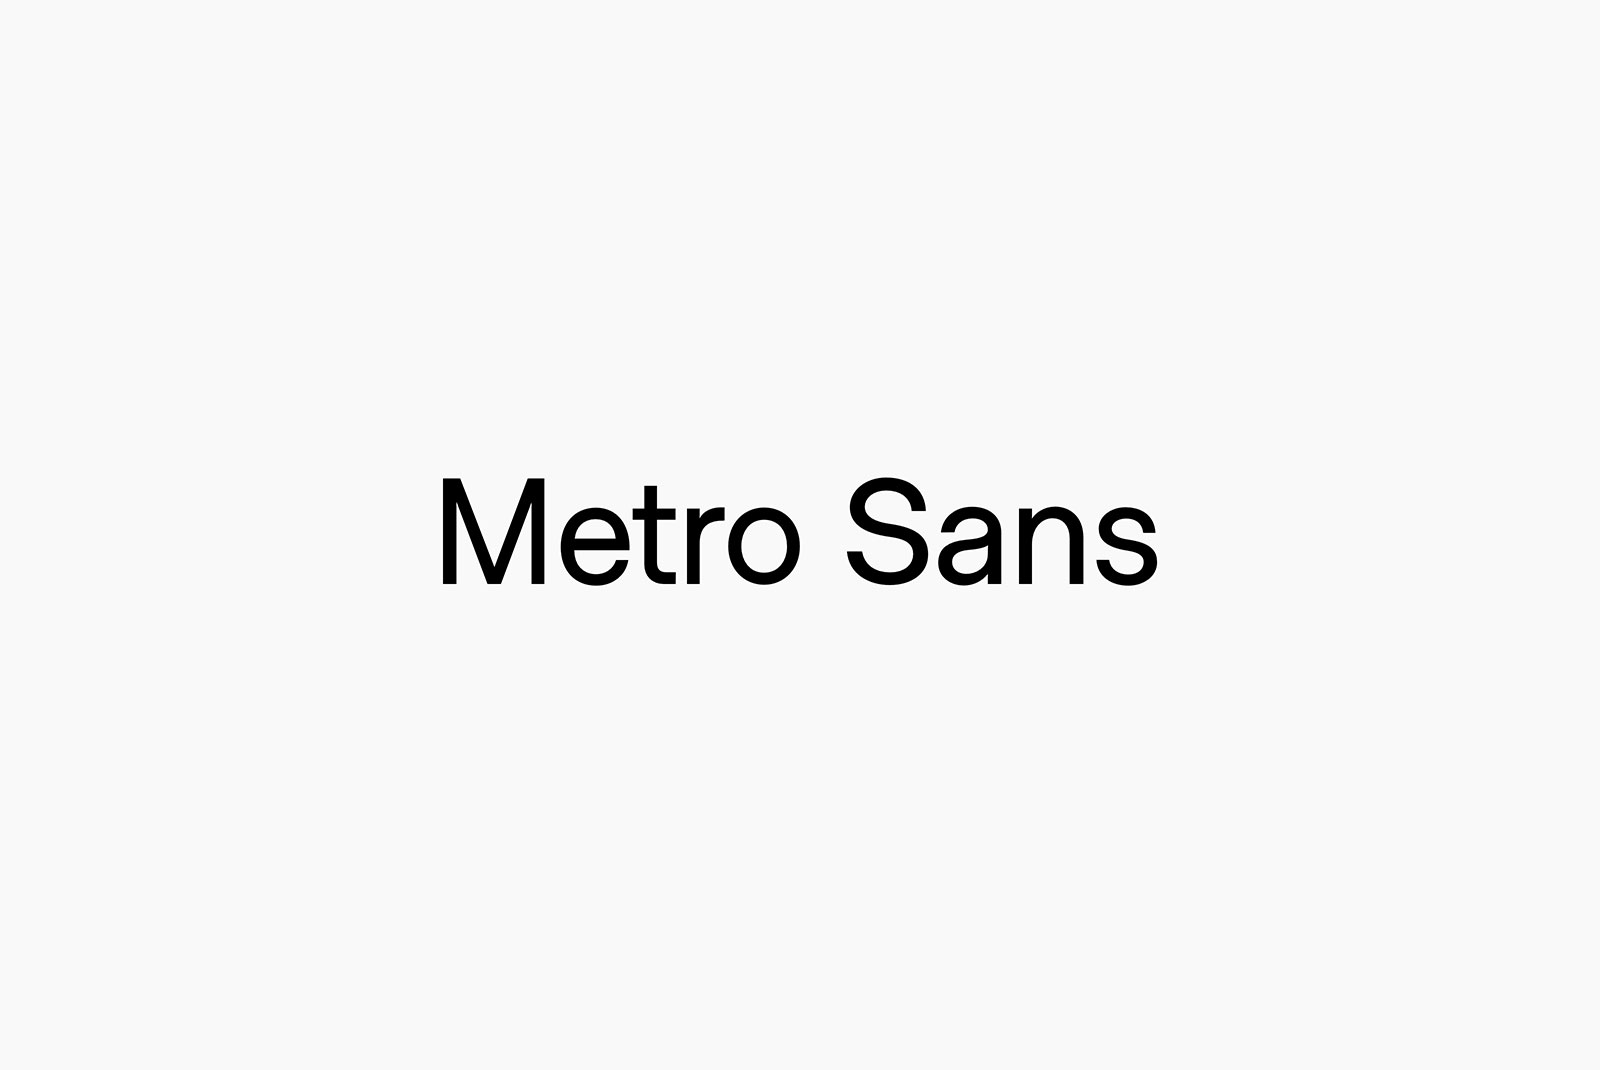 Sleek Metro Sans font display for modern design, perfect for web, print, branding, clear sans-serif typography preview.